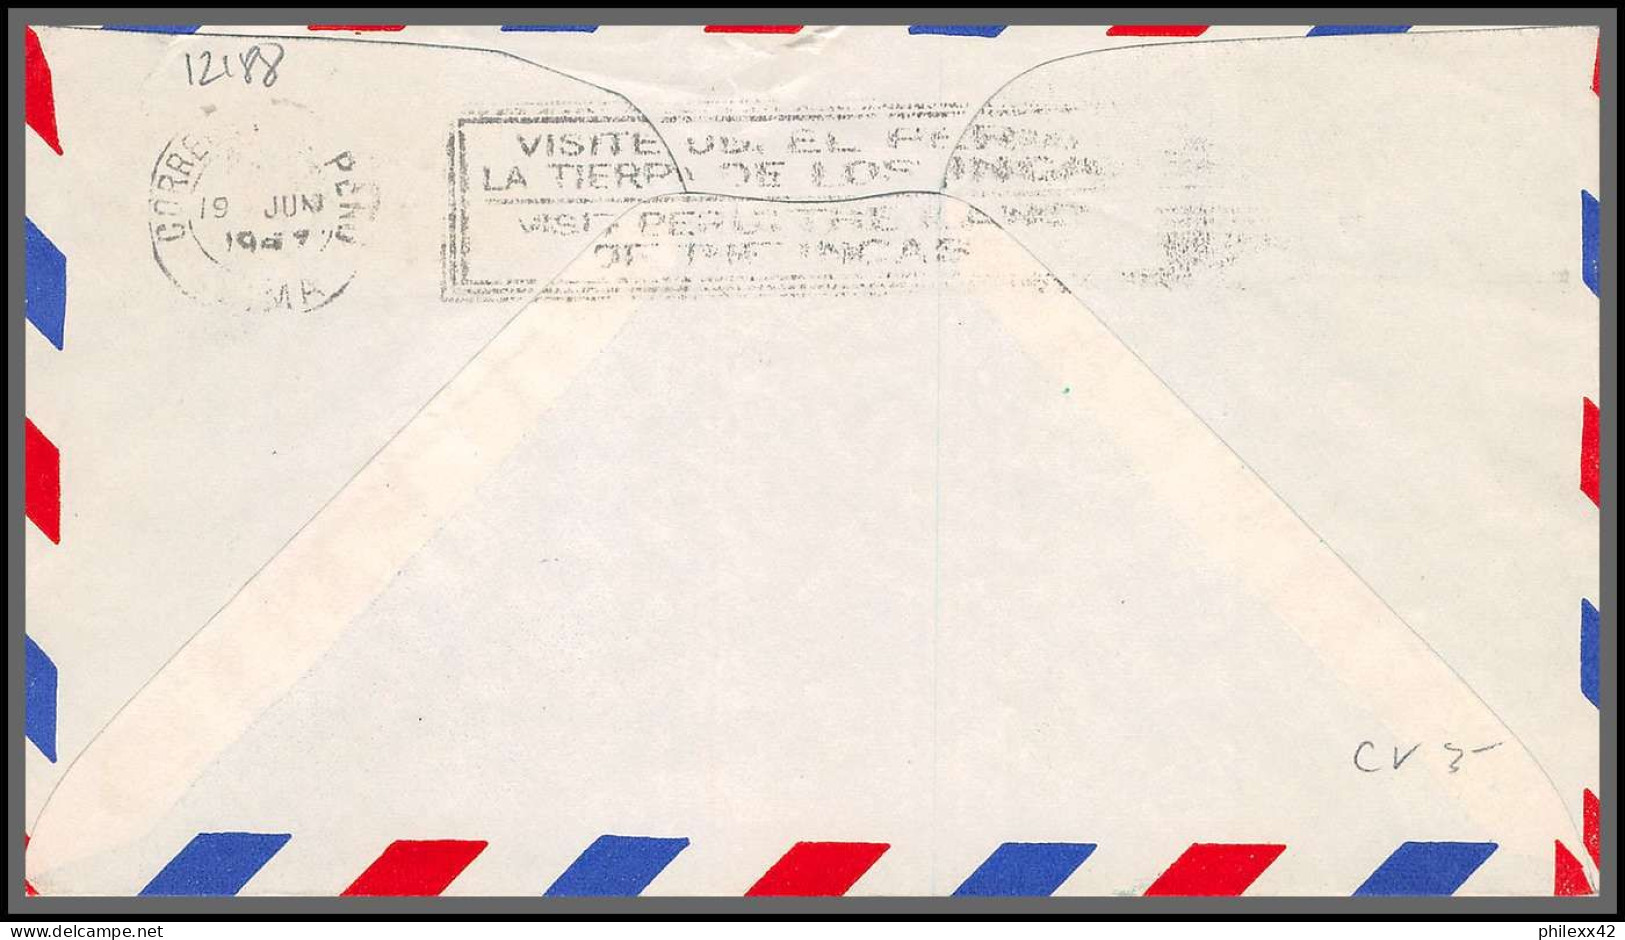 12188 Enveloppe Verte Fam 34 Houston To Lima Perou Peru 18/6/1948 Premier Vol First Flight Lettre Airmail Cover Usa Avia - 2c. 1941-1960 Lettres